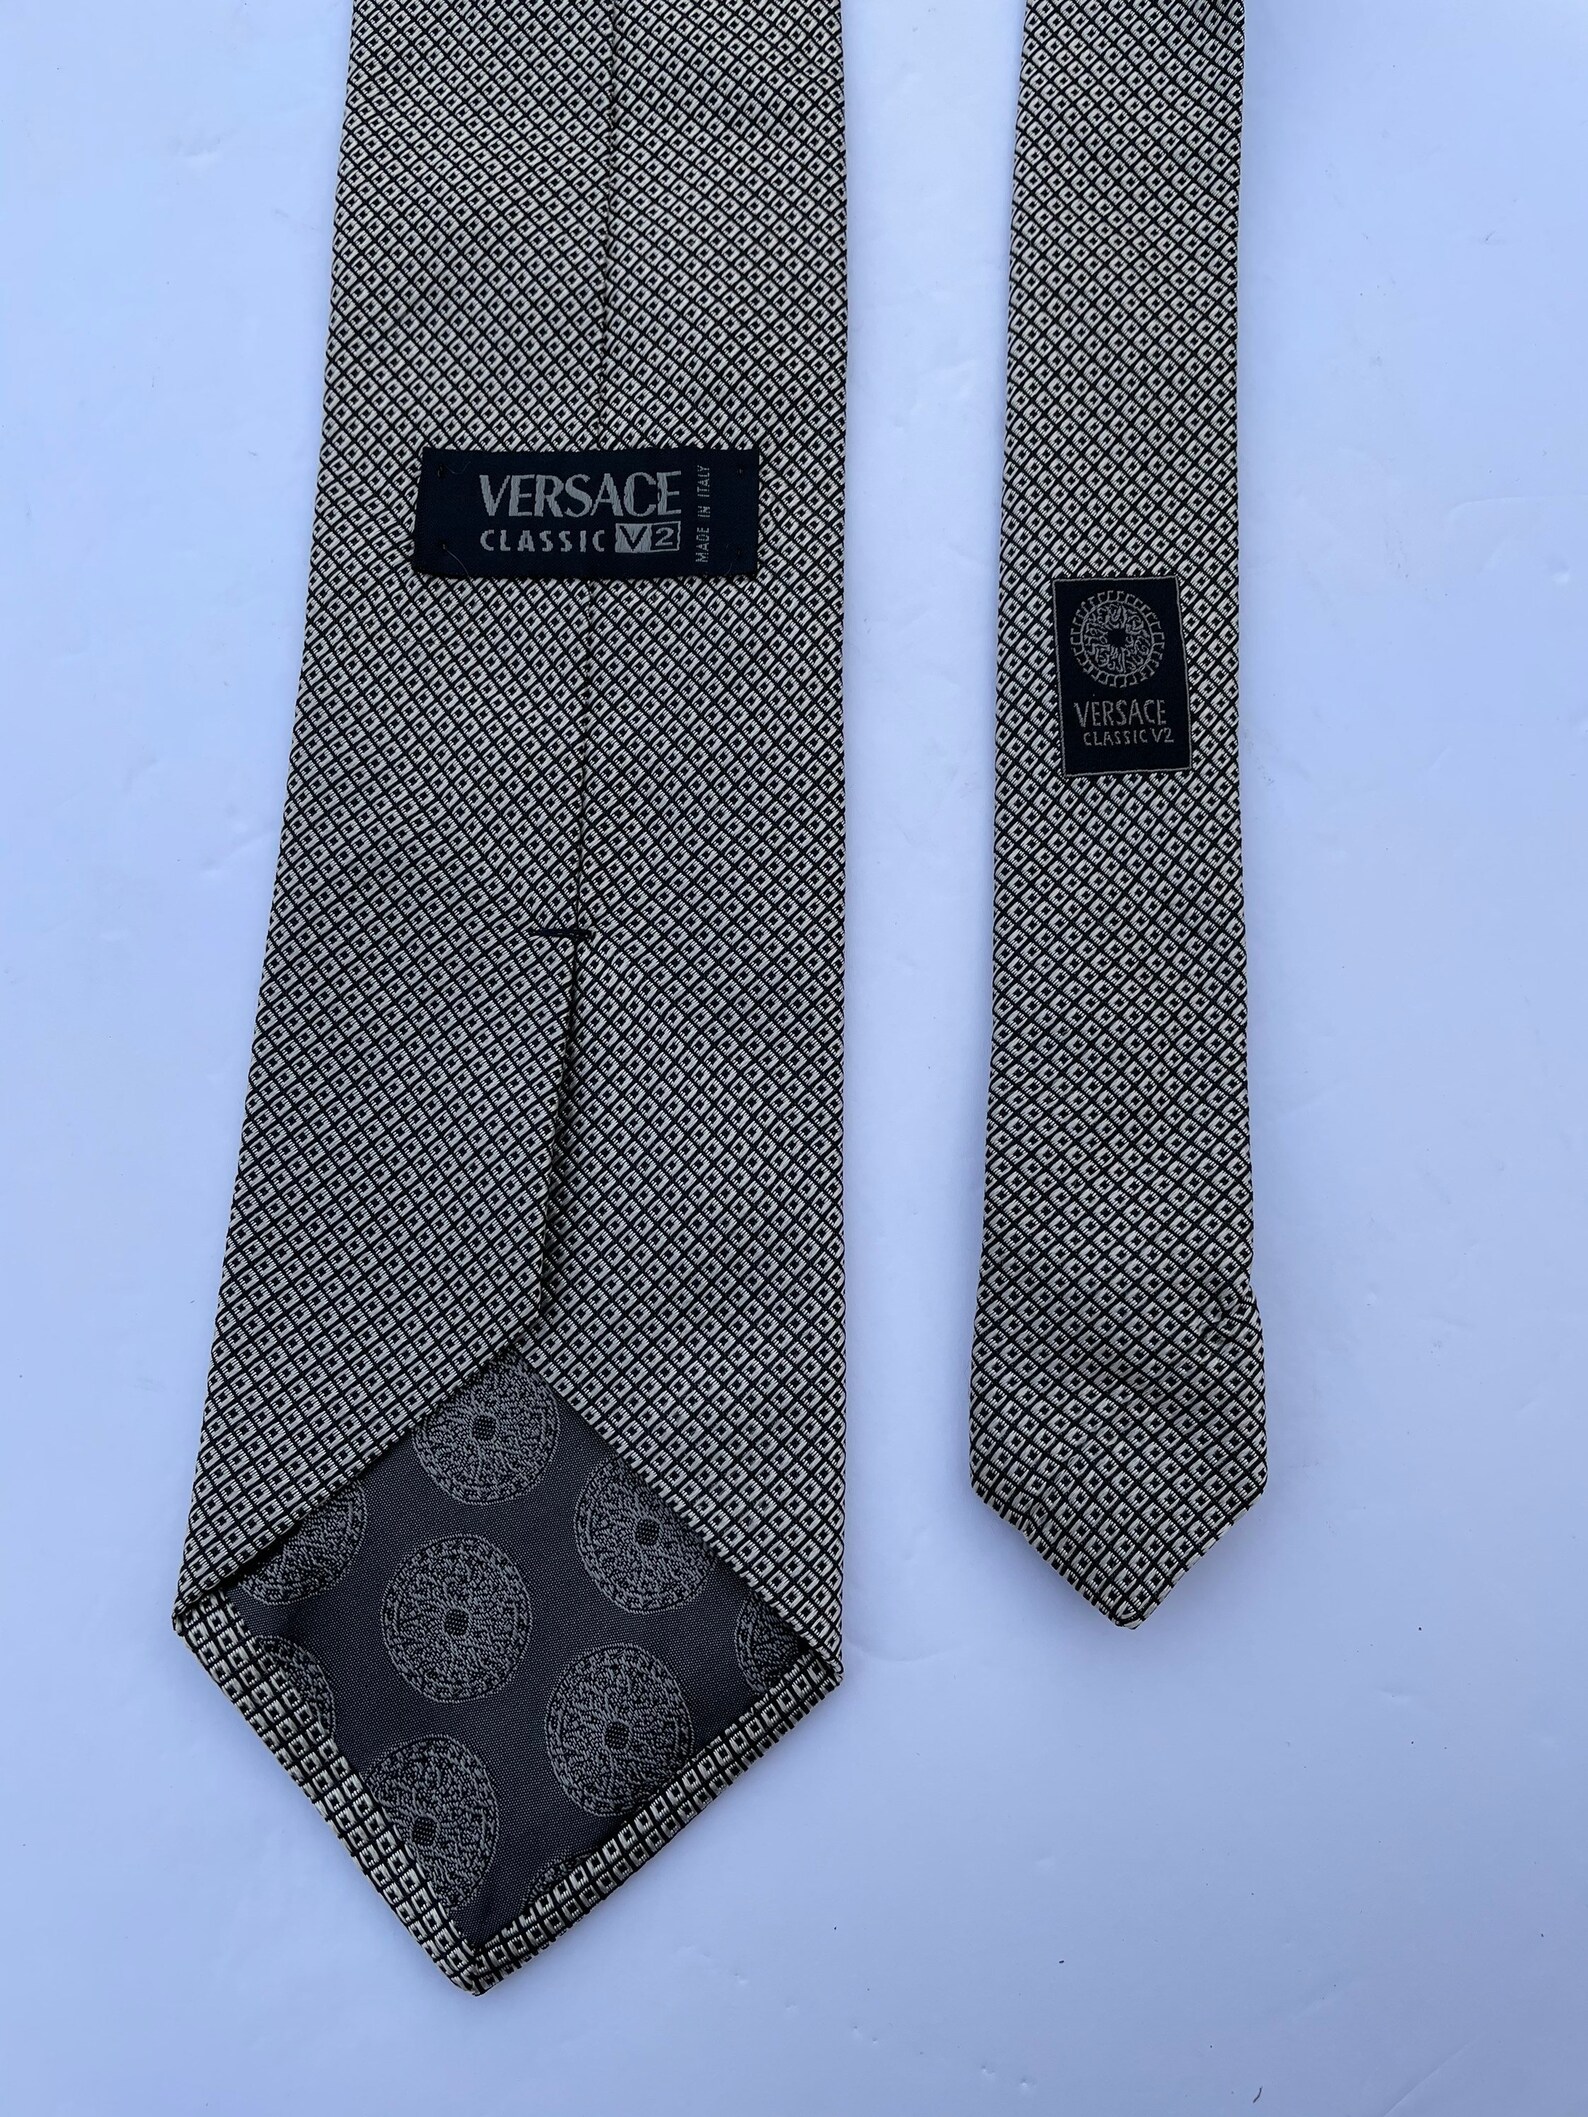 Vintage Versace Classic V2 Necktie | Etsy